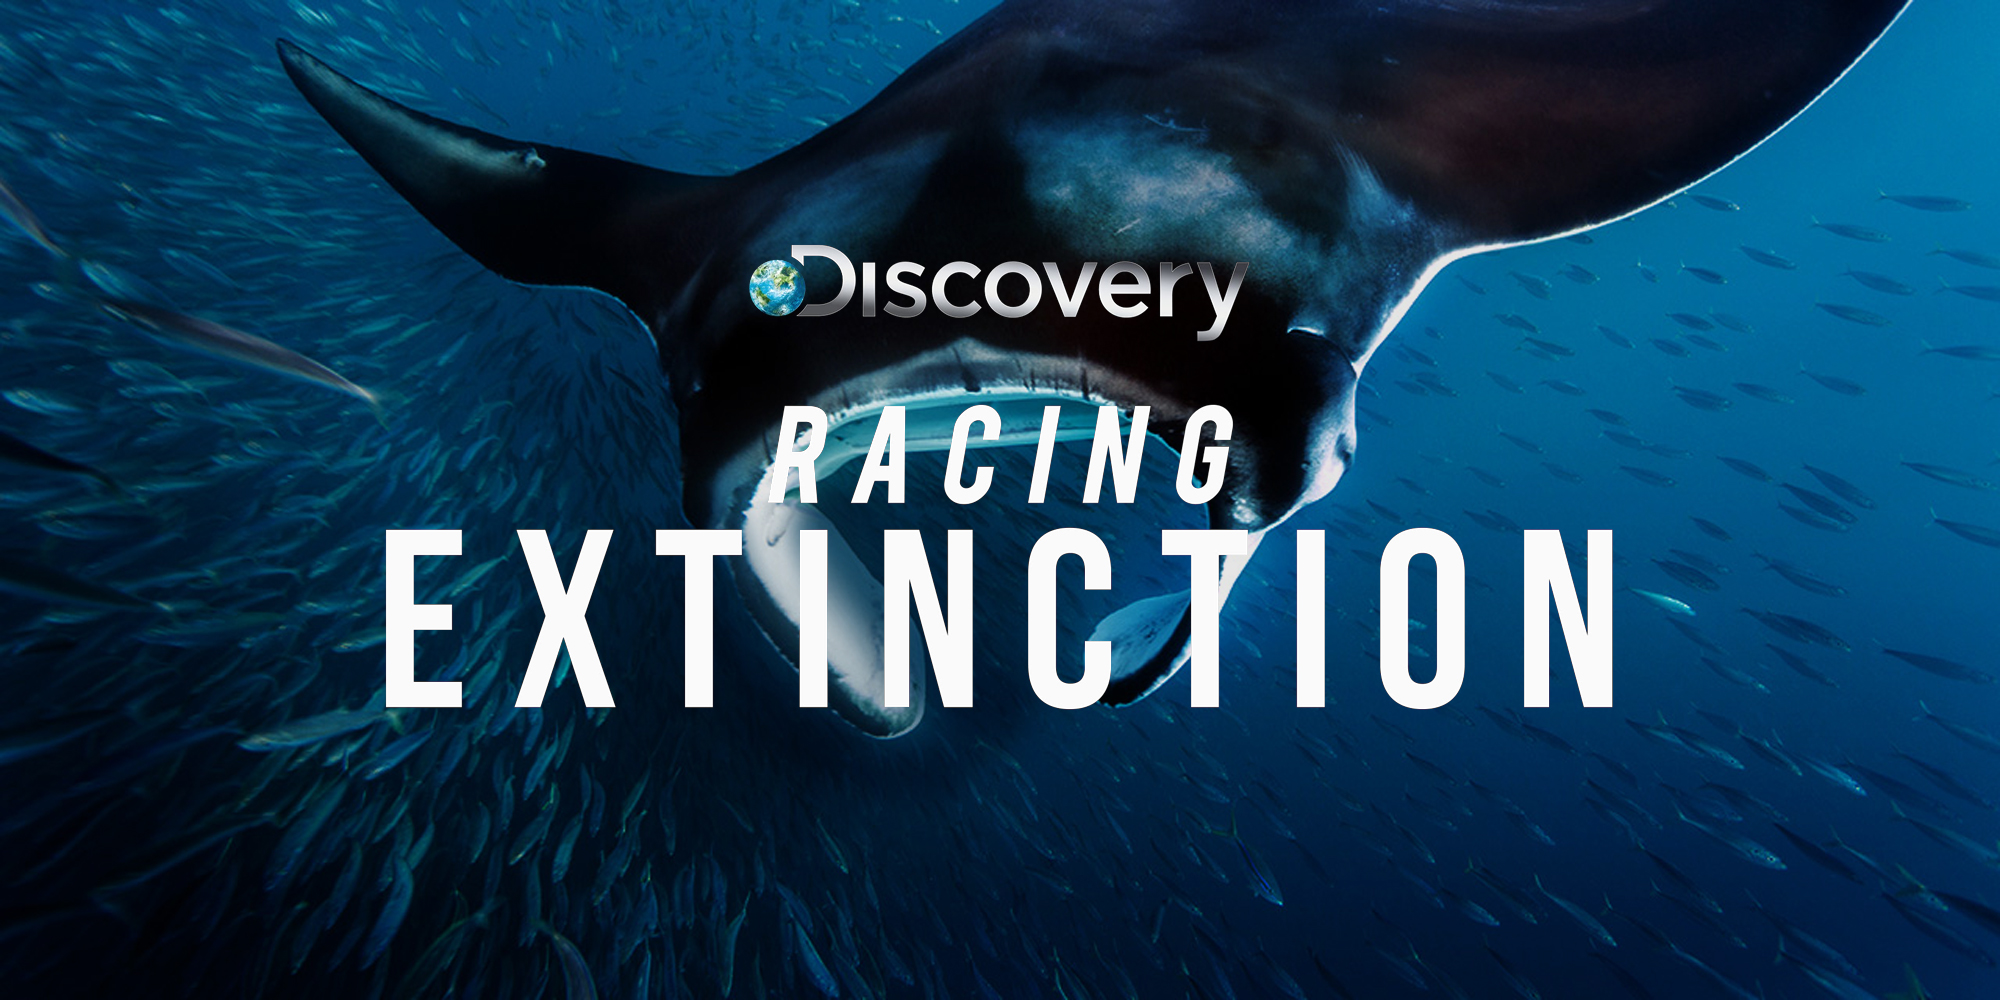  Racing Extinction